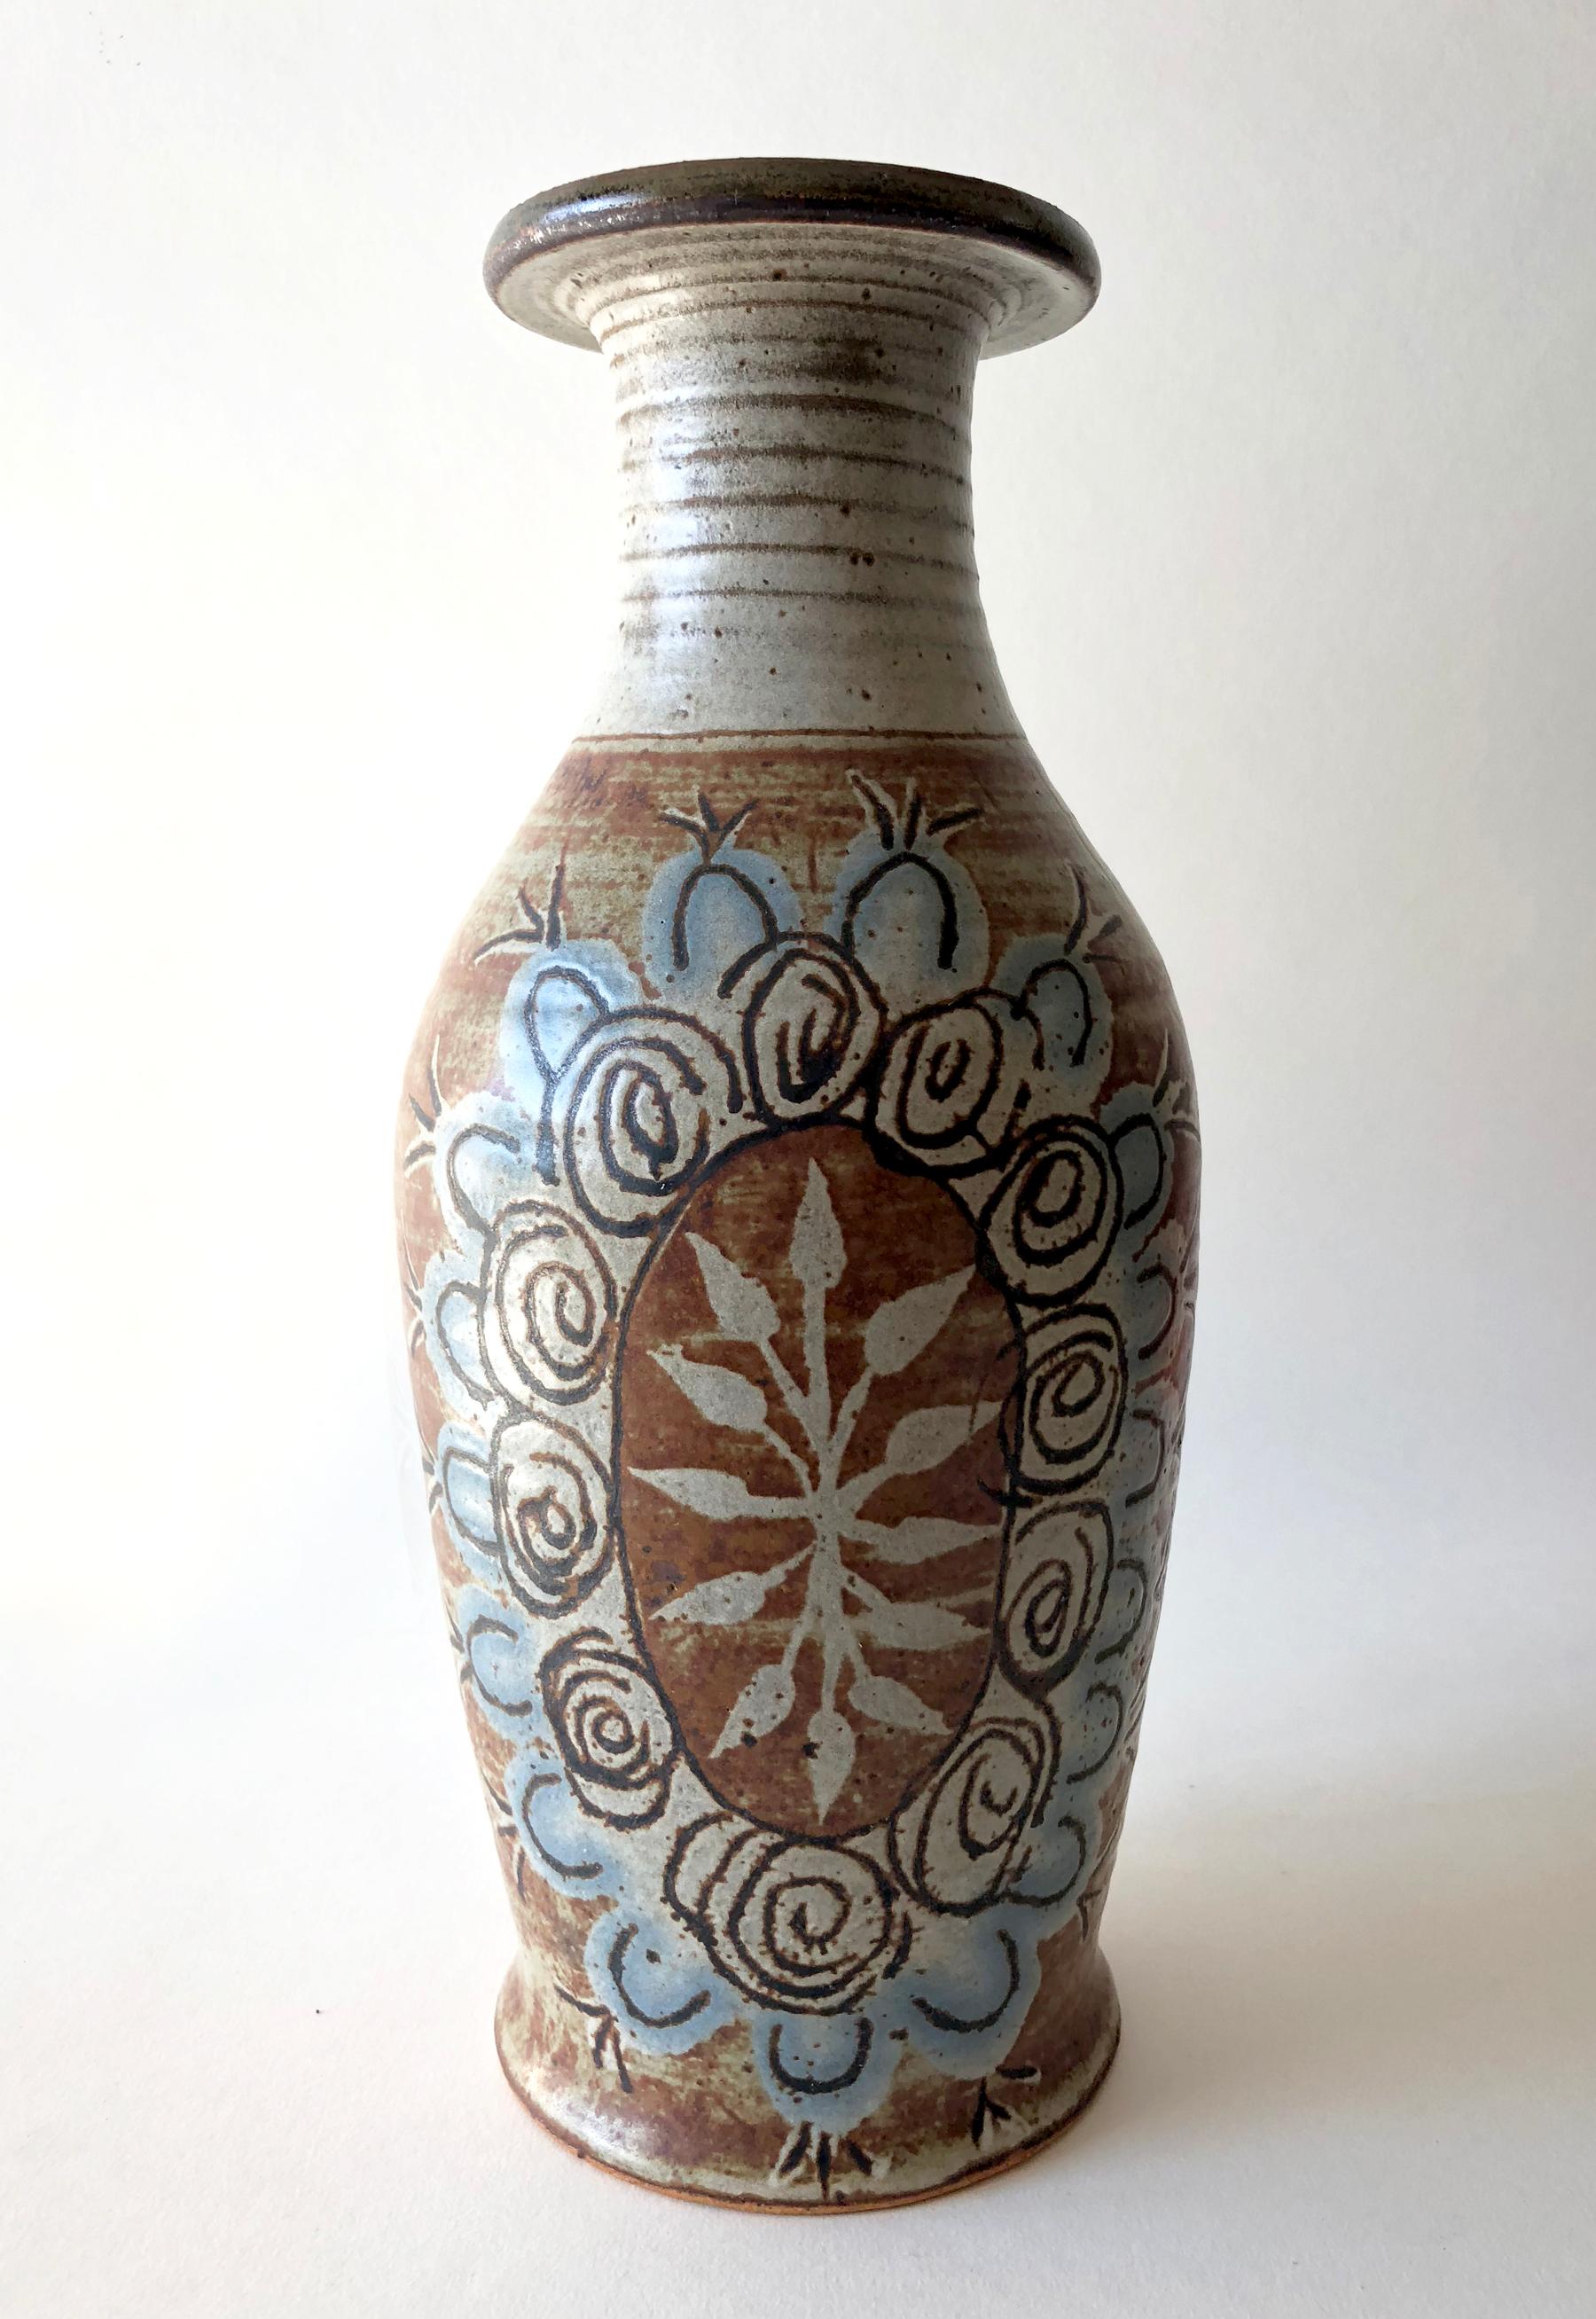 Handmade California stoneware vase by Paul Pressburger of California. Vase stands 11